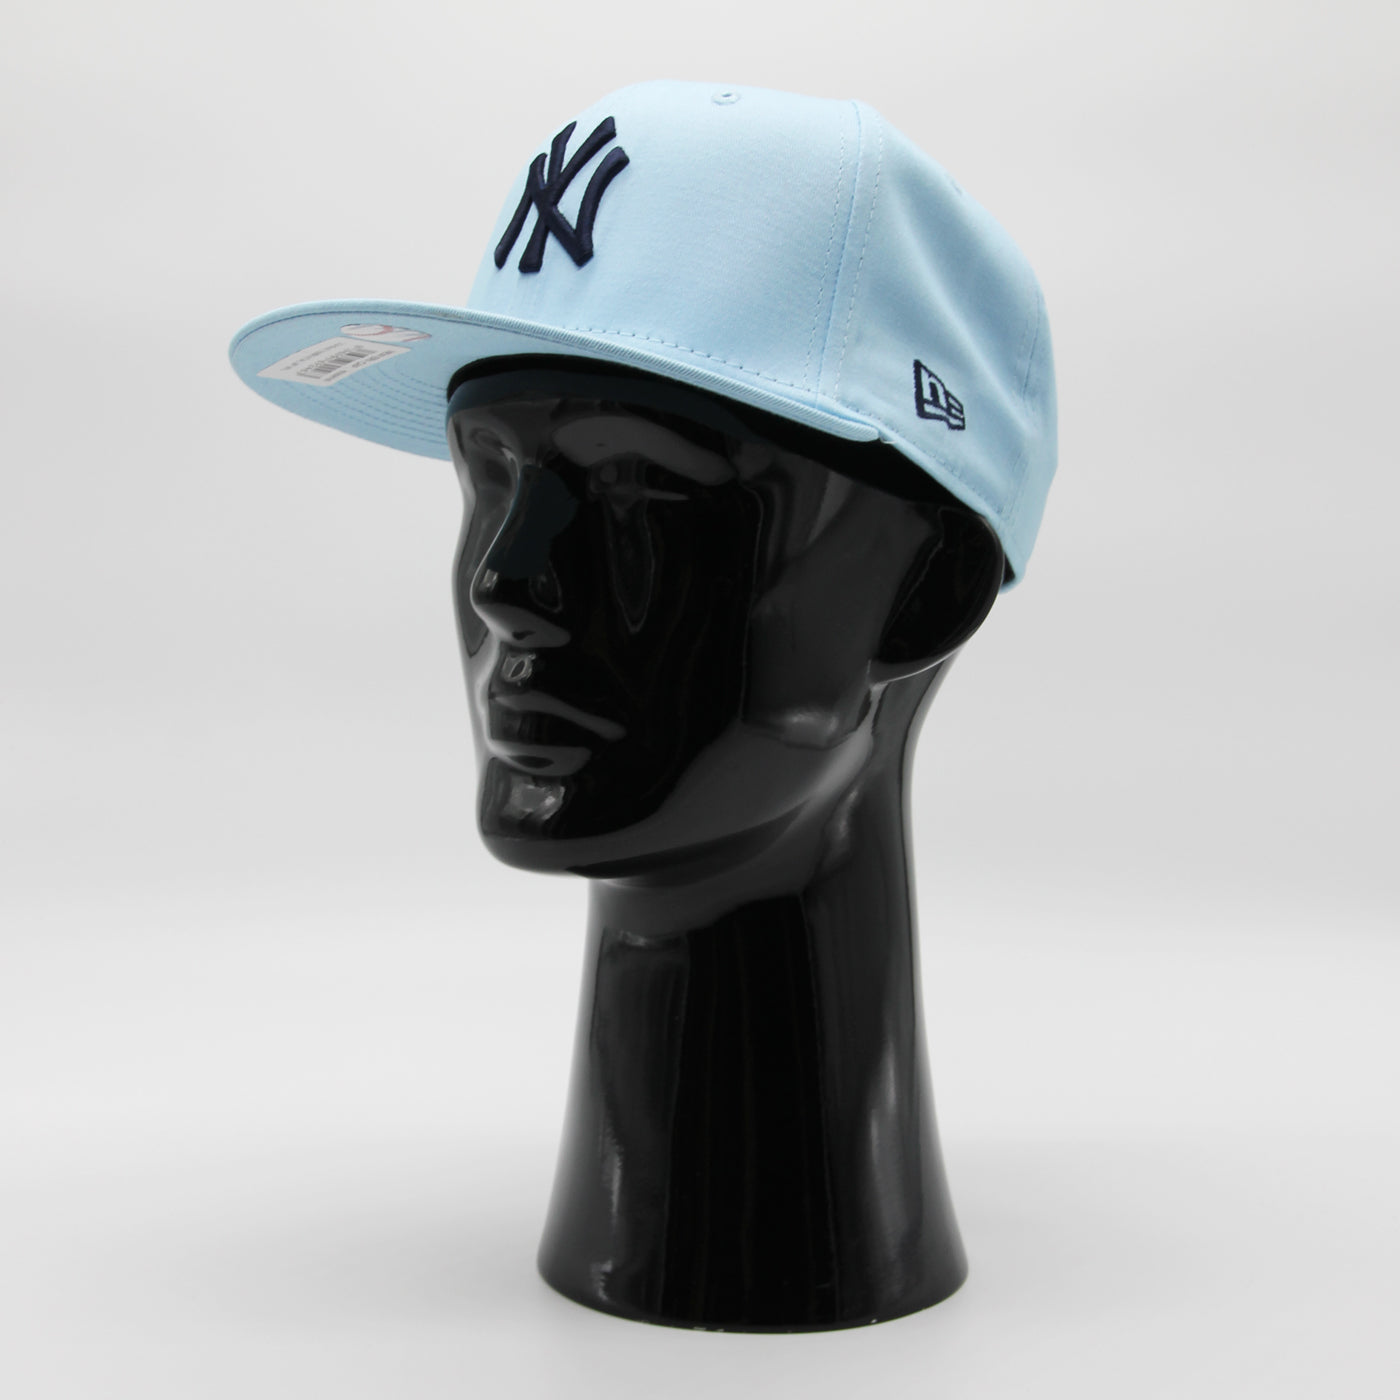 New Era League Essential 9Fifty NY Yankees lt.blue/navy - Shop-Tetuan